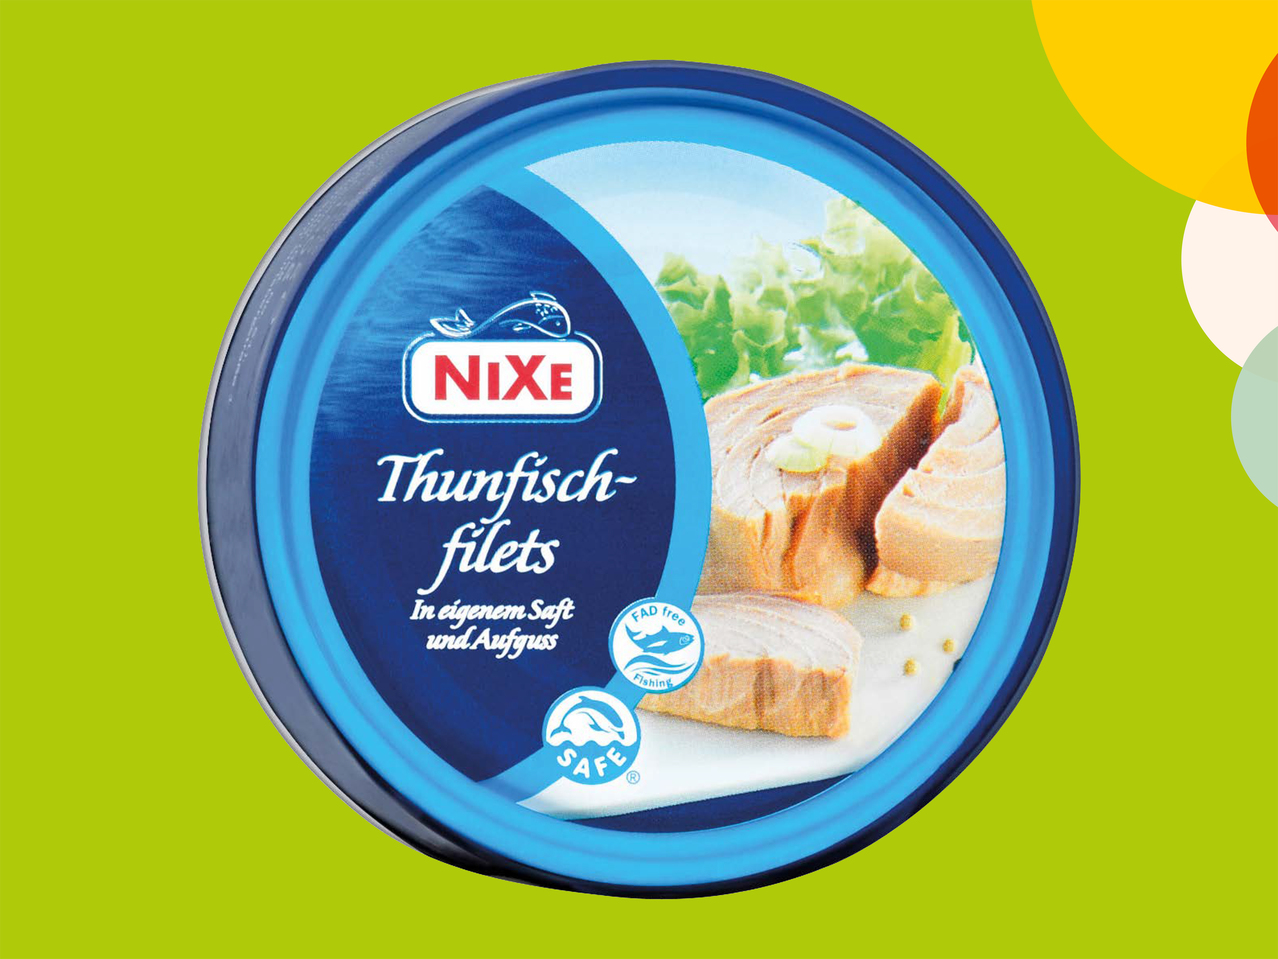 Thunfisch FAD free